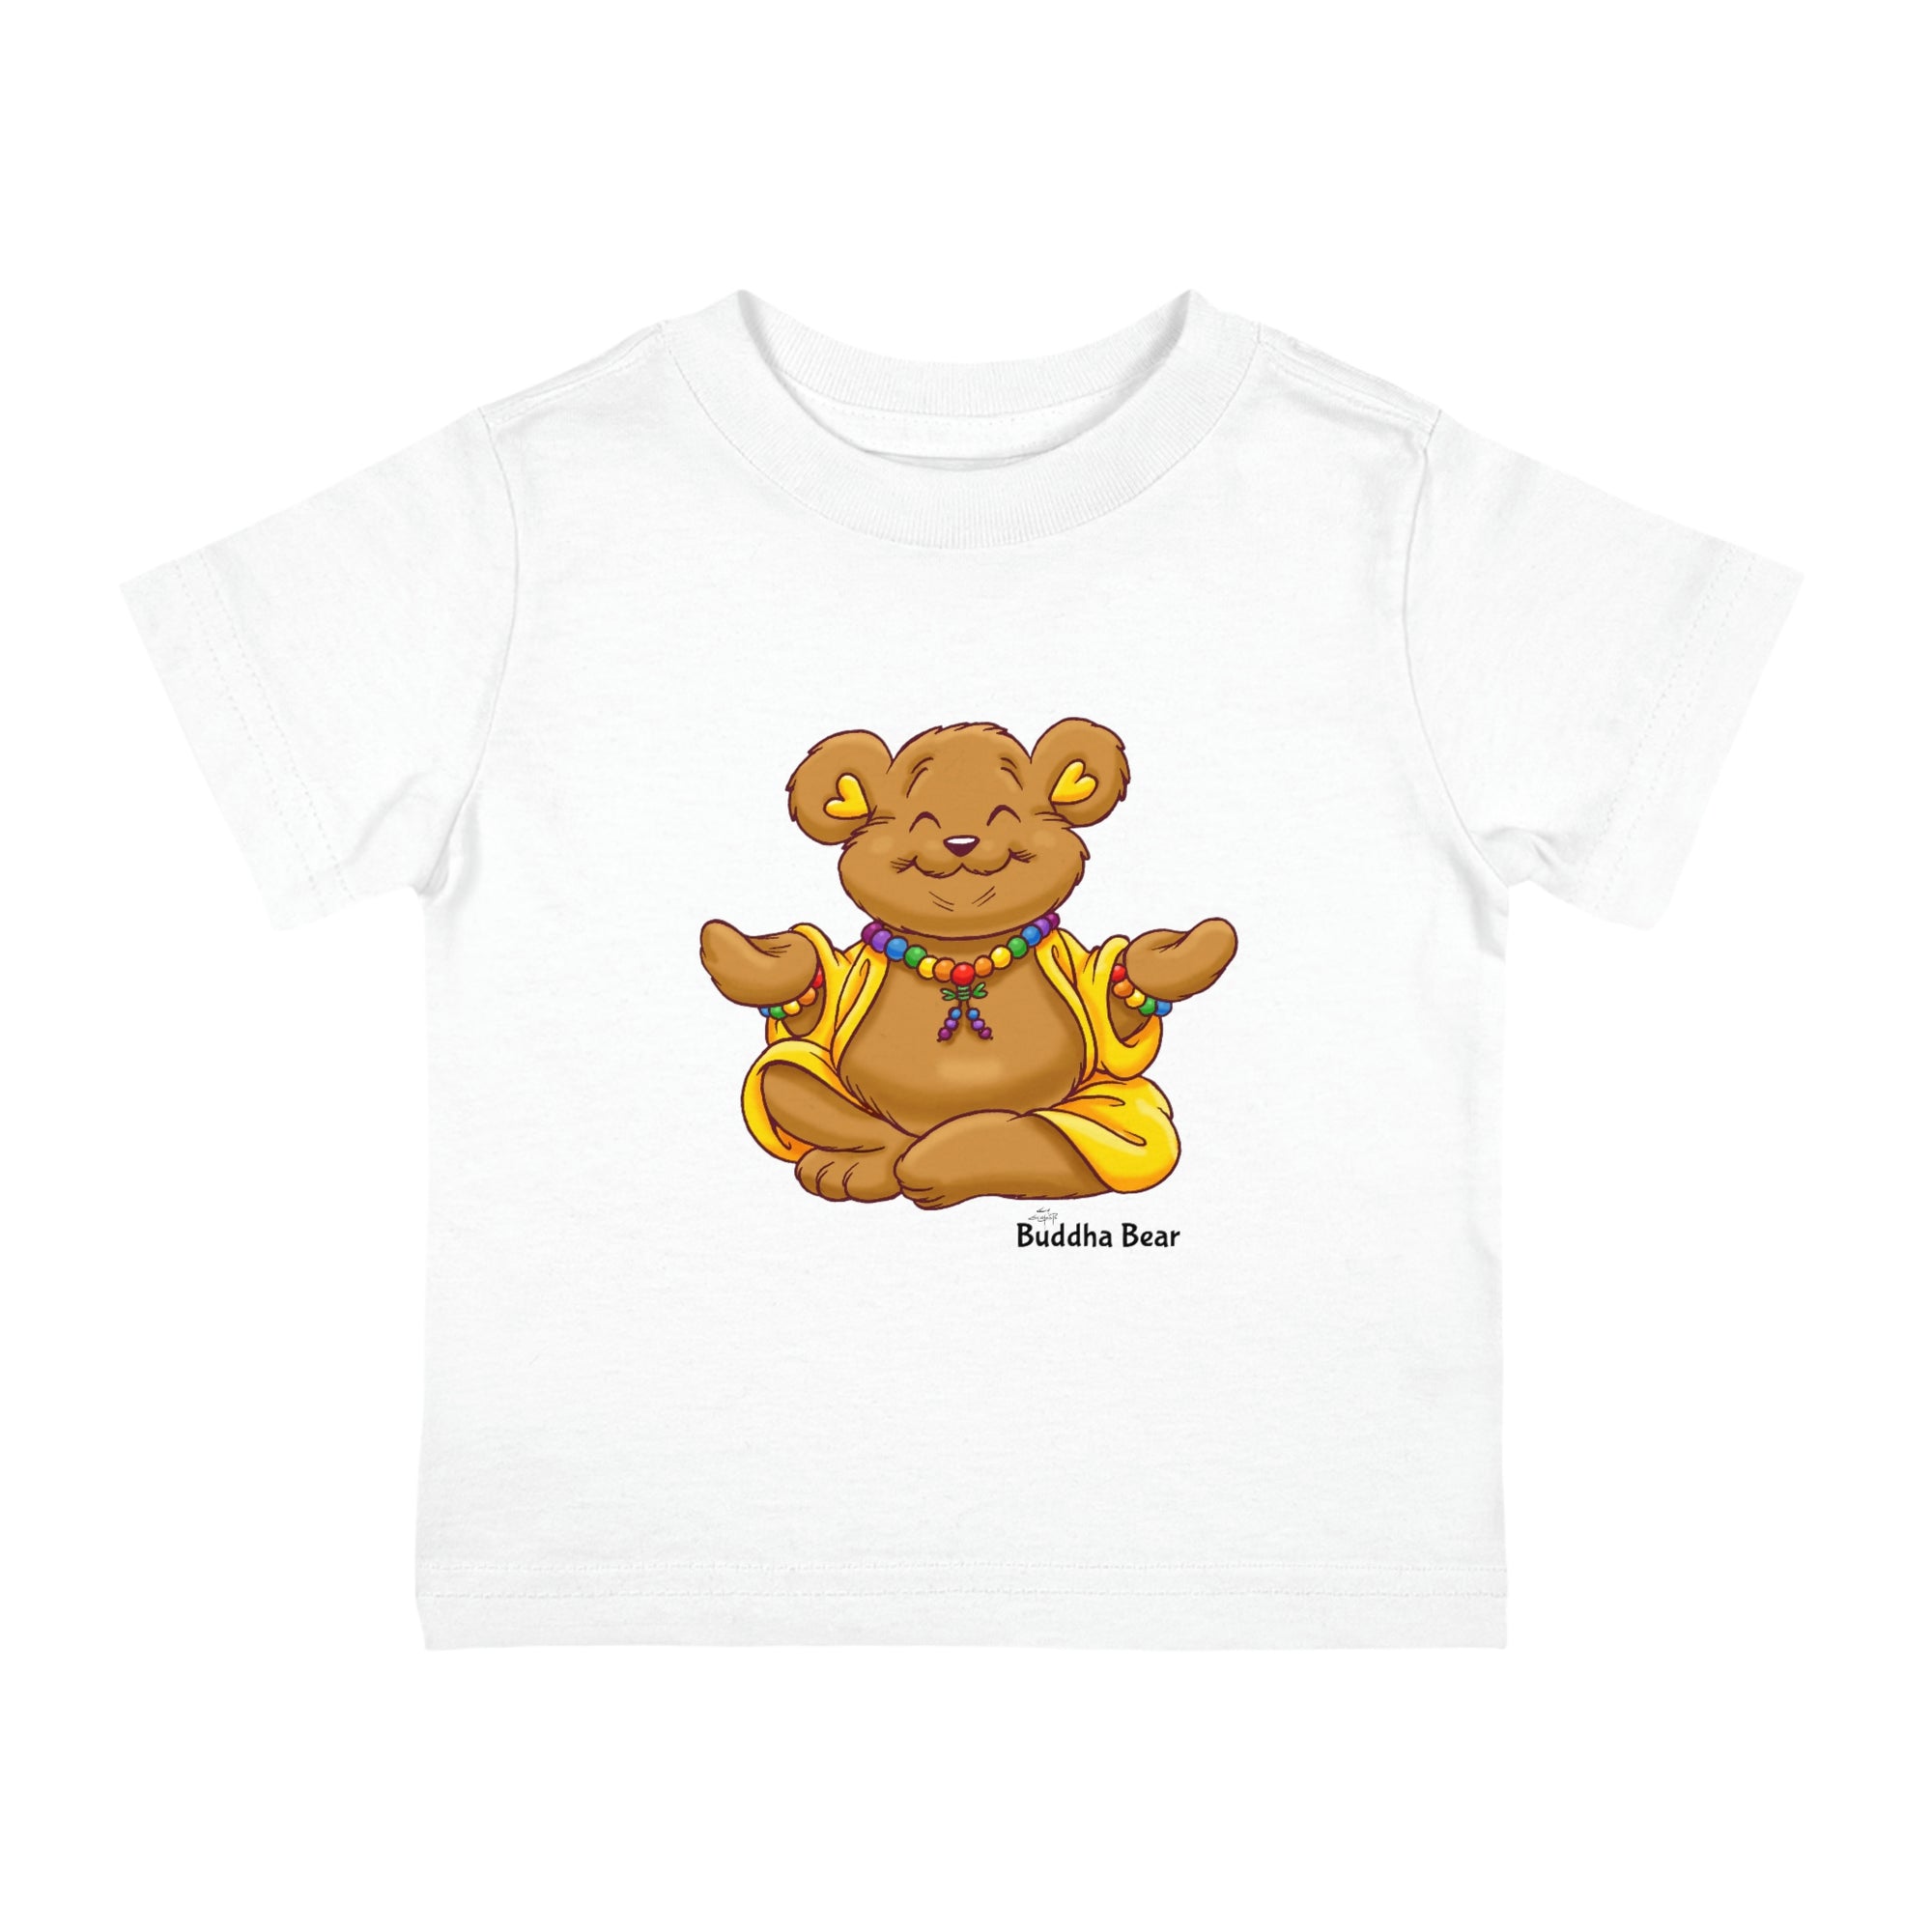 Buddha Bear's Infant Cotton Jersey Tee